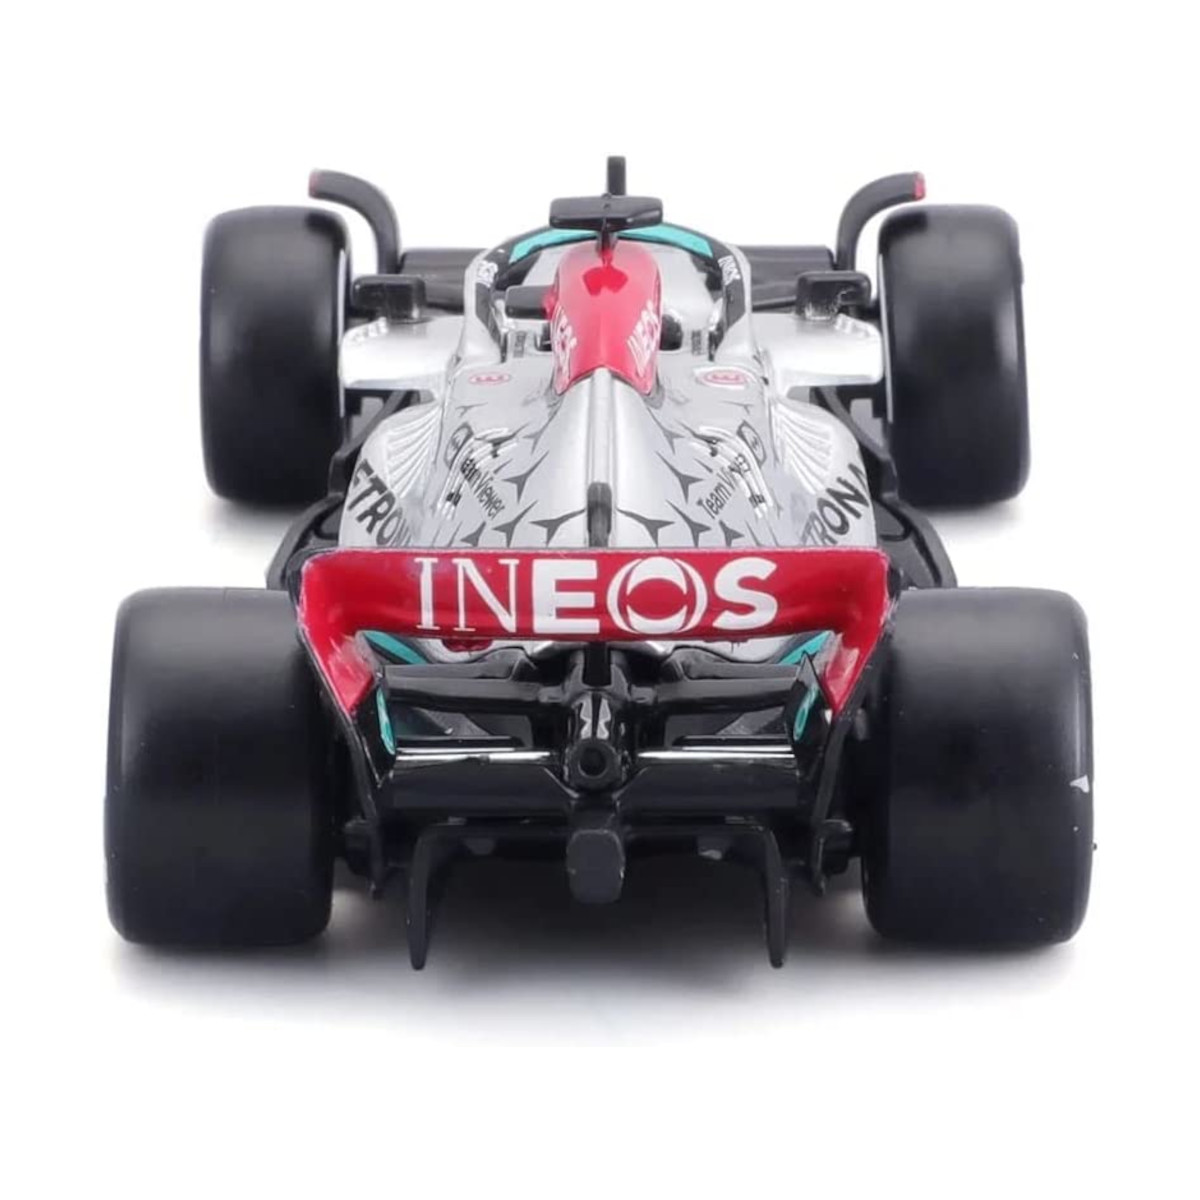 E (Maßstab Mercedes-AMG F1 Spielzeugauto Performance W13 18-38065 #44 Modellauto - Hamilton - 1:43) BBURAGO